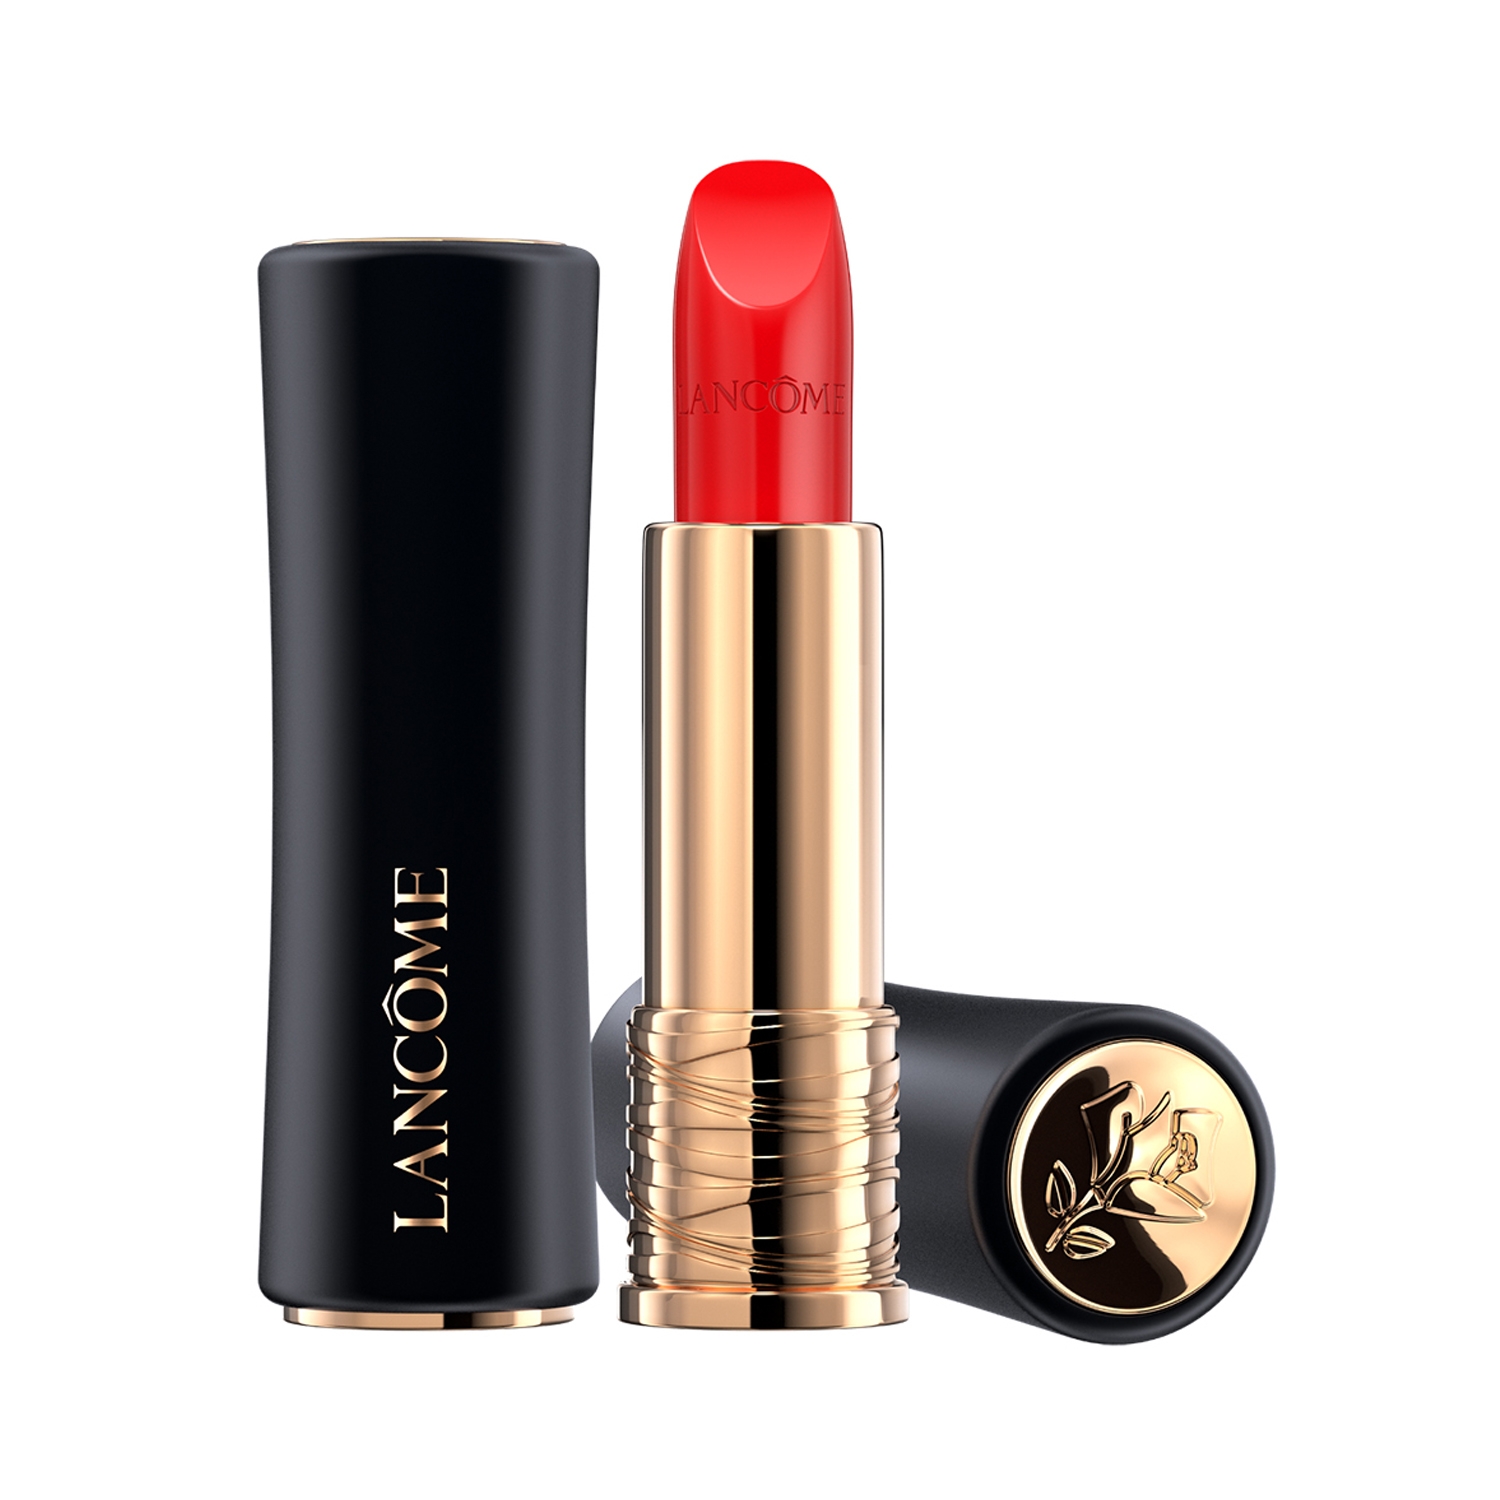 Lancome | Lancome L' Absolu Rouge Cream Lipstick - 132 Caprice De Rouge (3.4g)